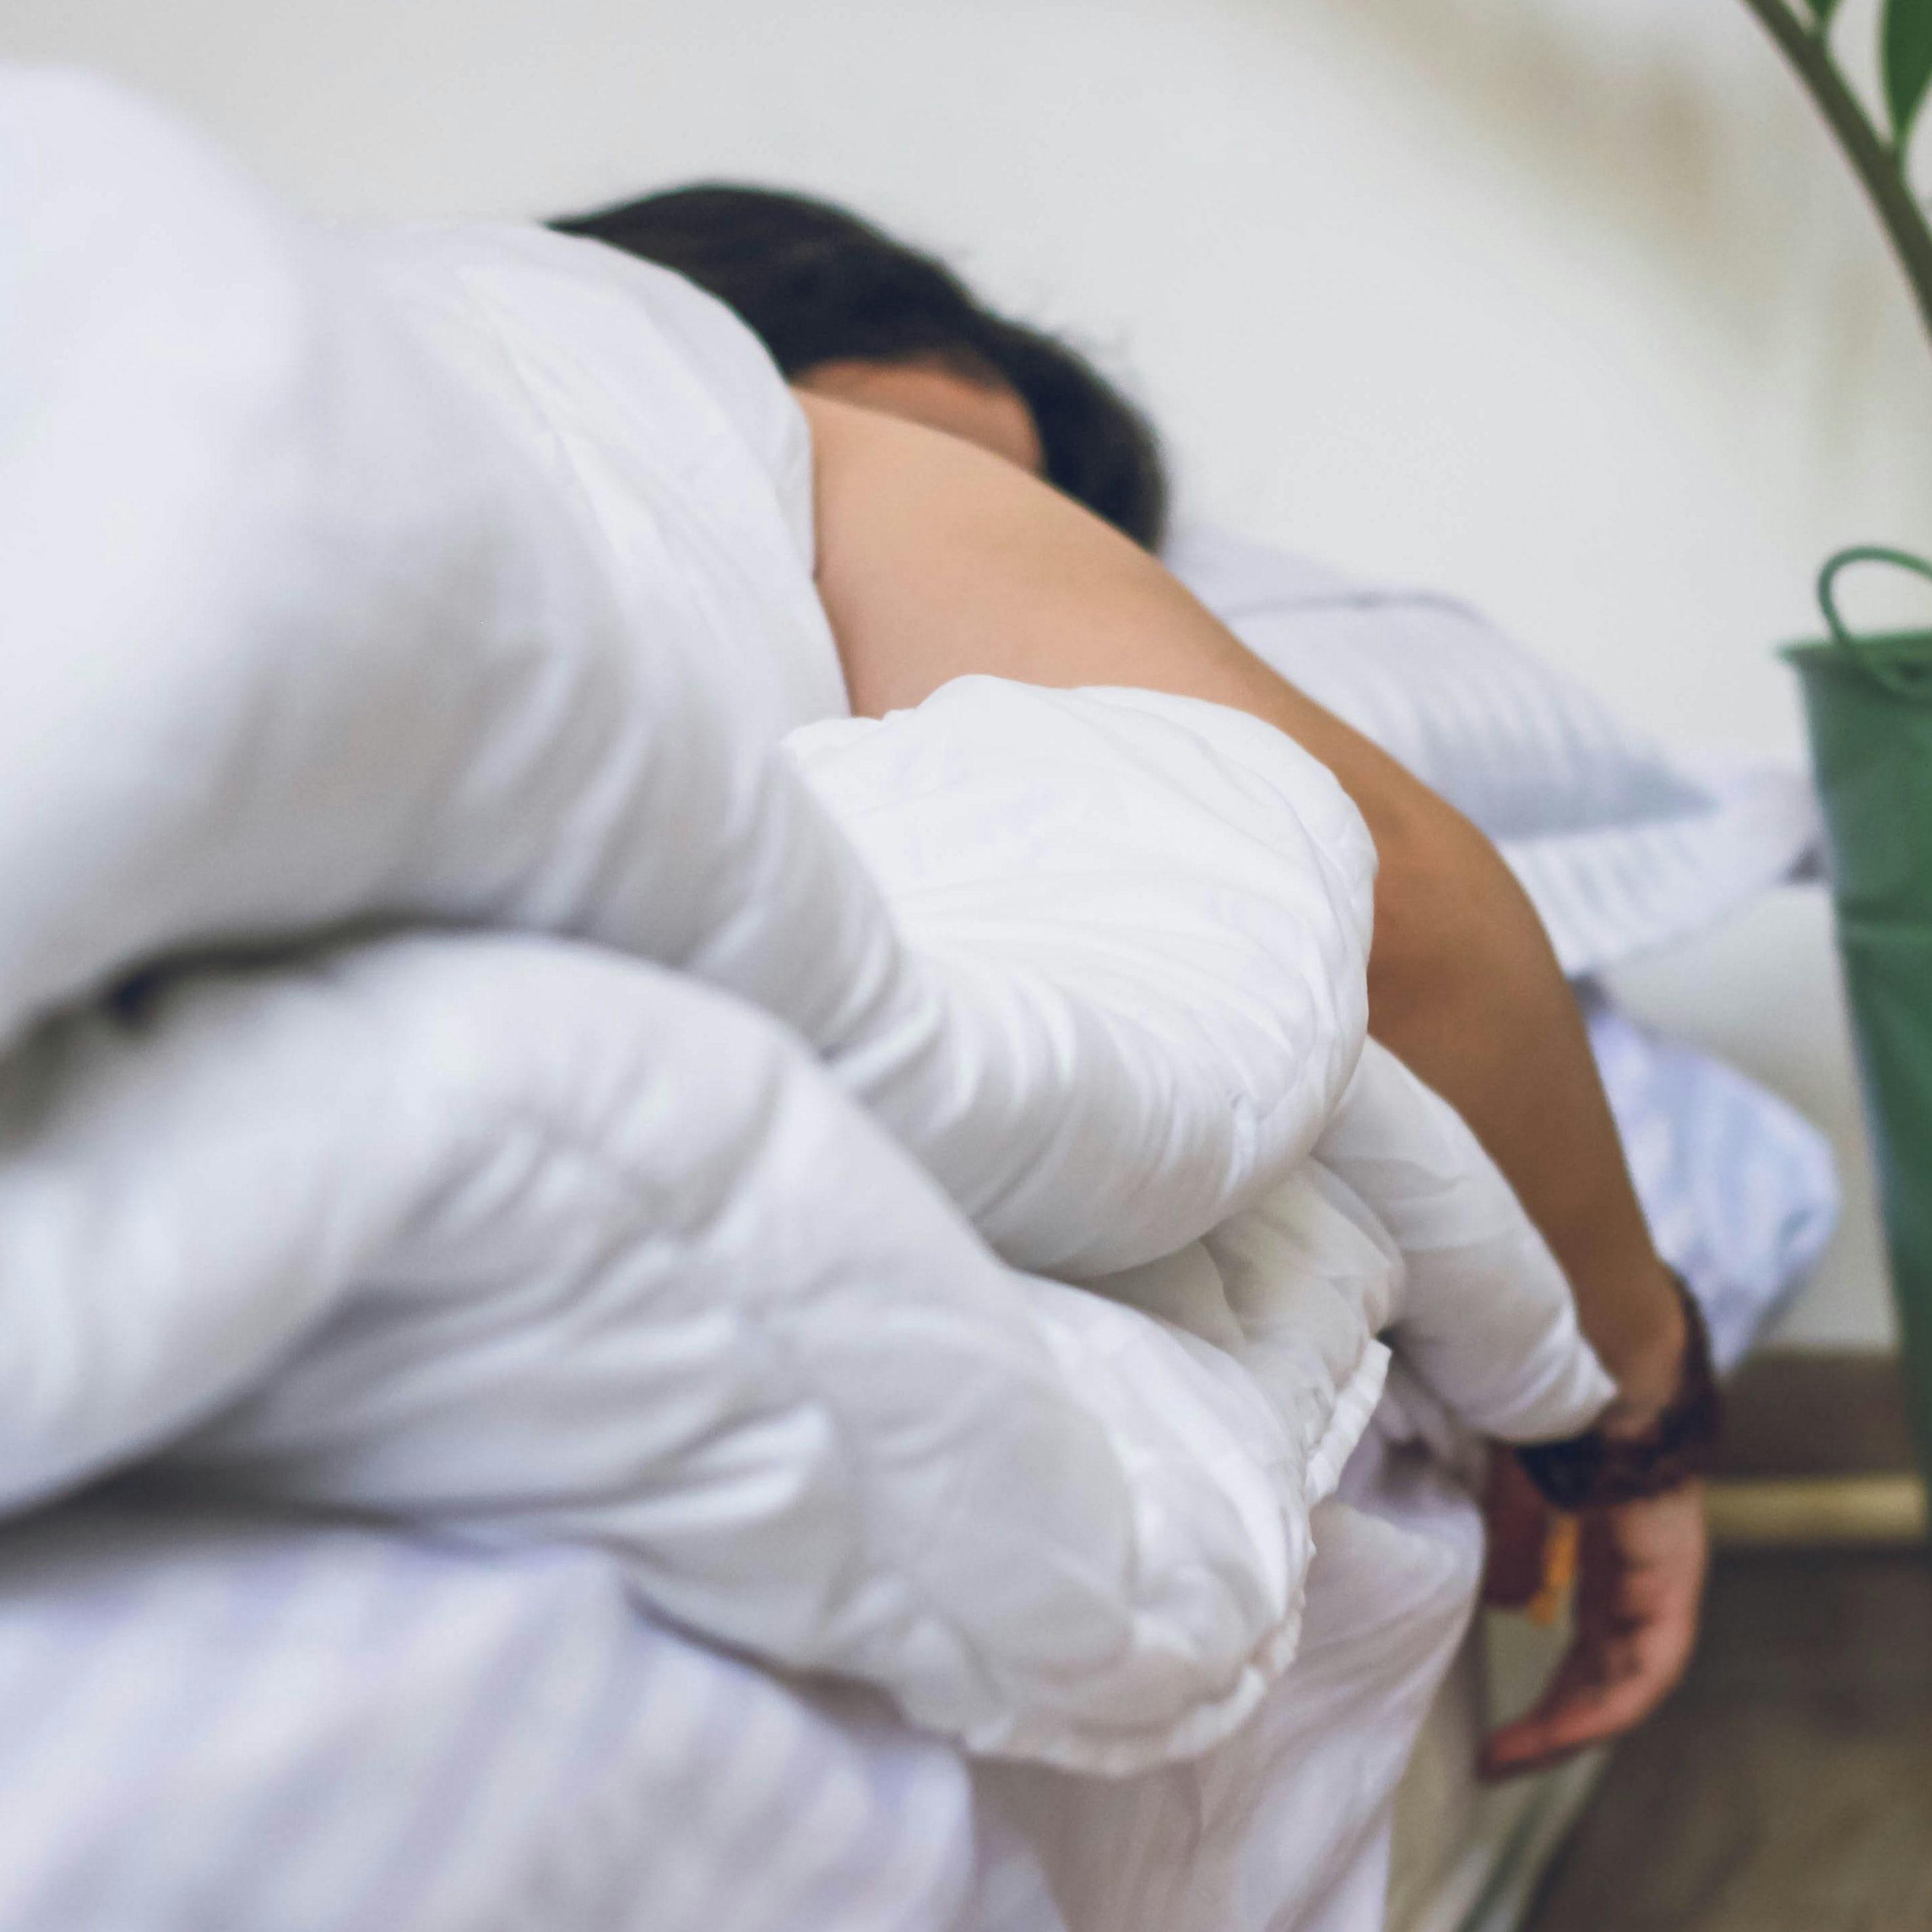 Esketamine Infusion May Prevent Post-Surgery Sleep Disturbances